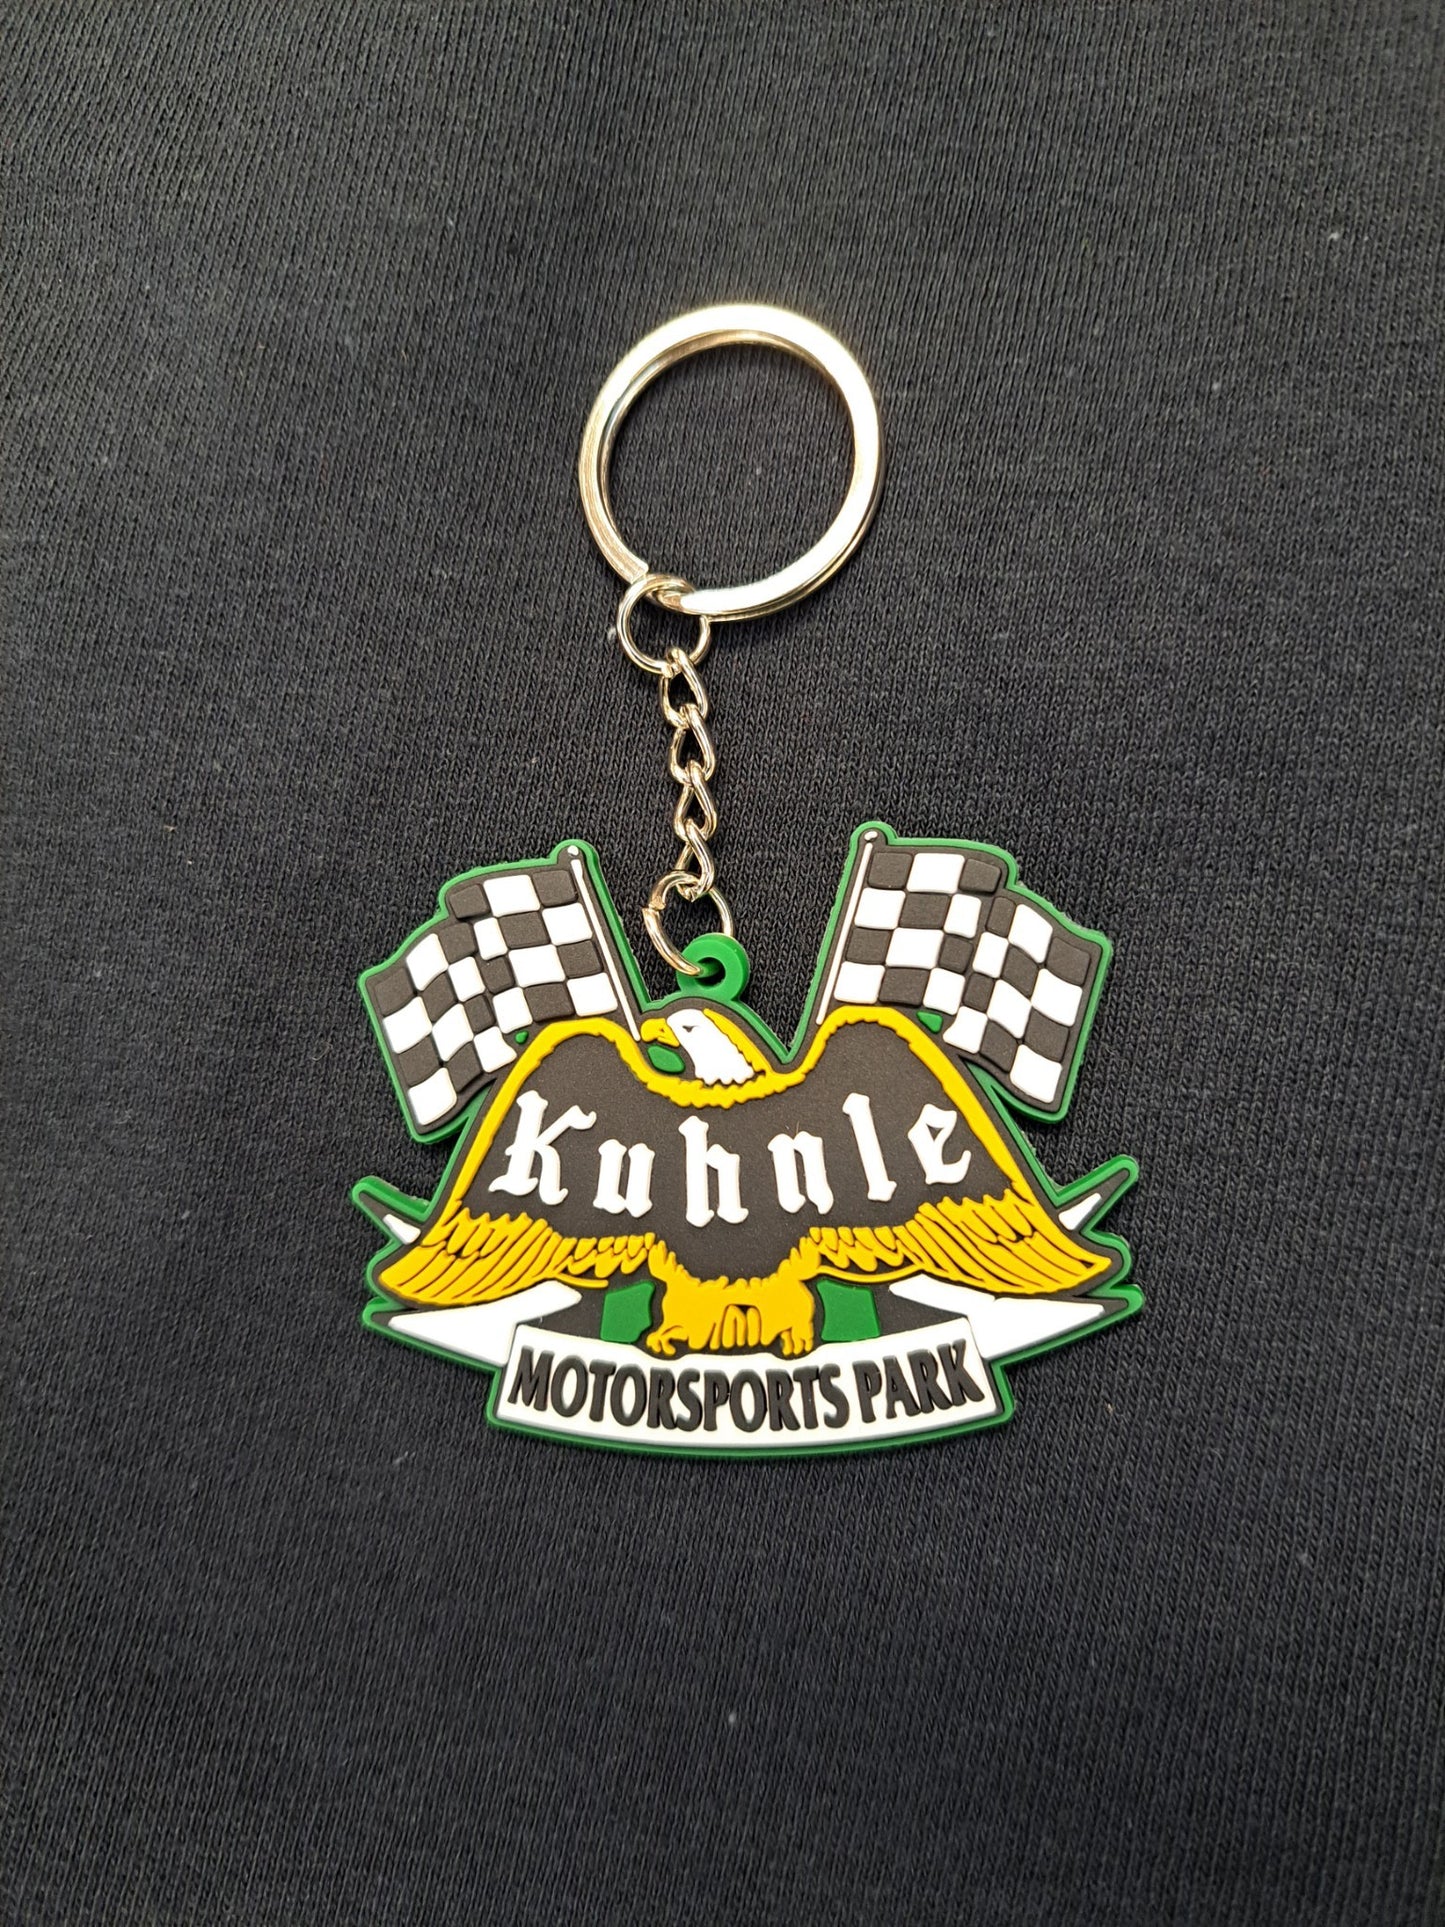 Kuhnle Motorsports Park Keychain